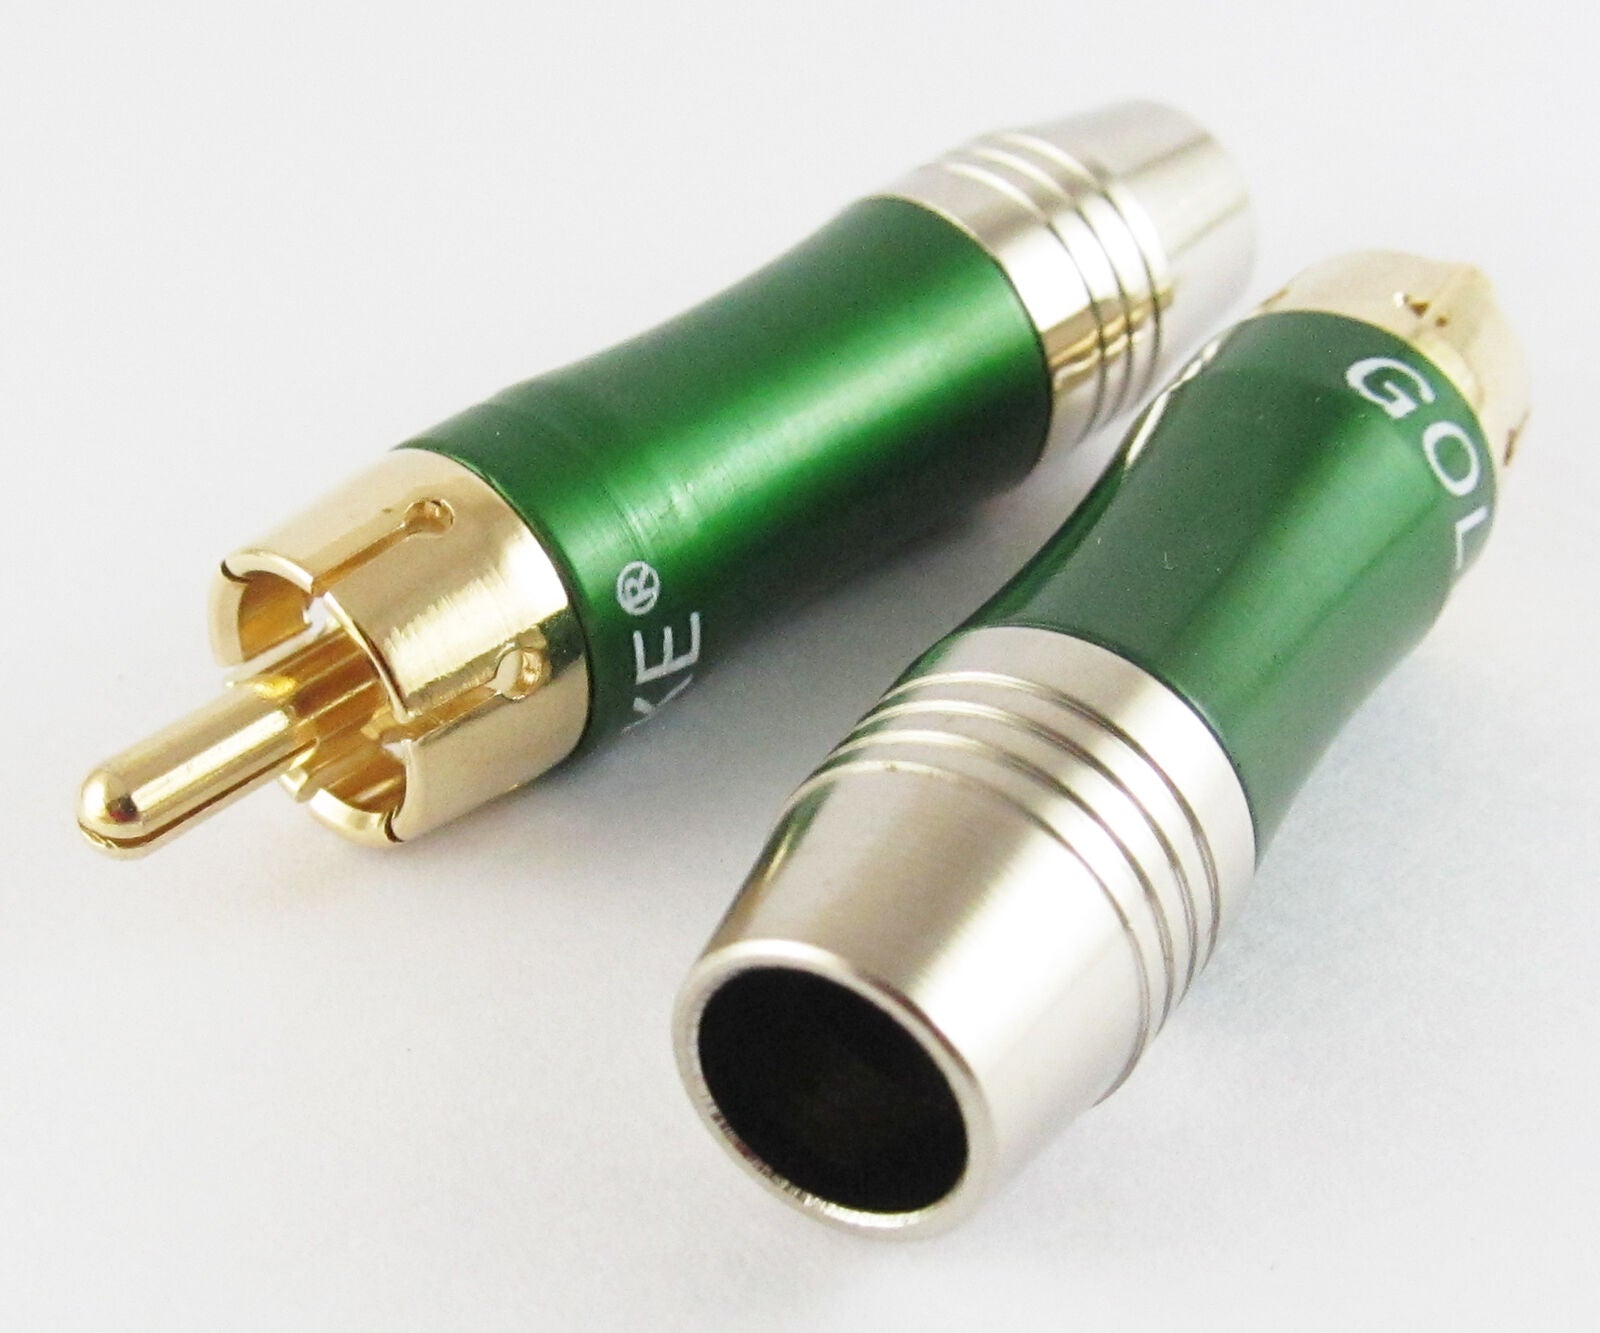 1pcs Green RCA plug with aluminum housing copper plug A/V Audio Video connector